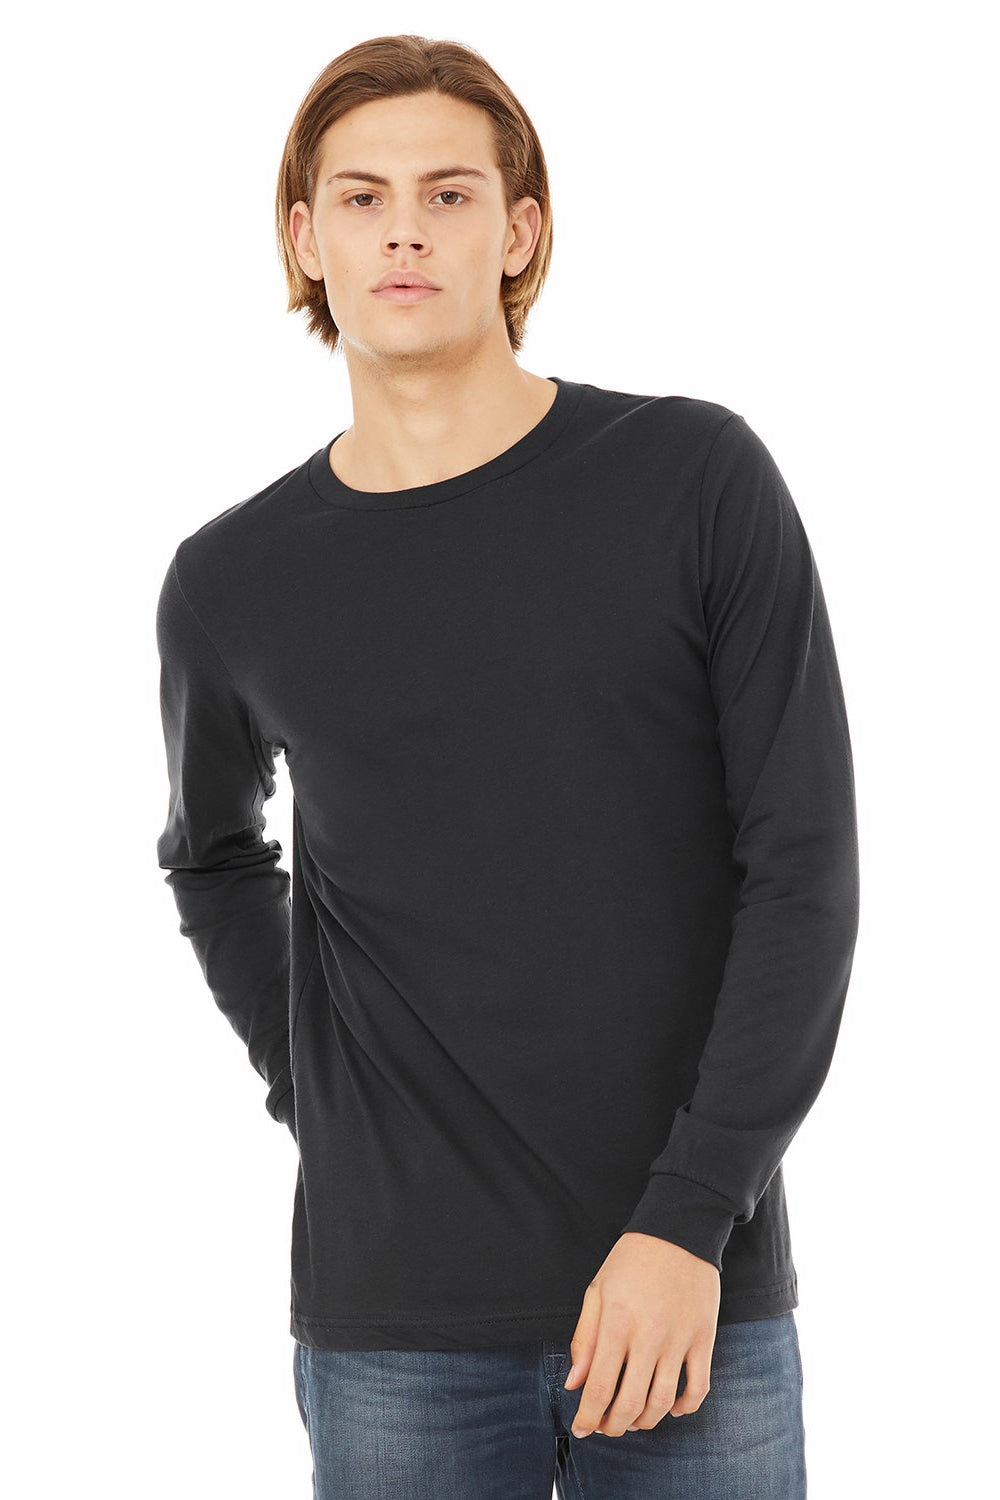 Bella + Canvas BC3501/3501 Mens Jersey Long Sleeve Crewneck T-Shirt Dark Grey Model Front